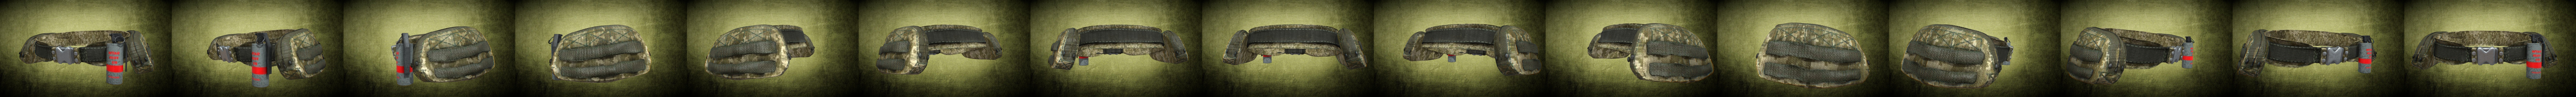 Military Tactical Belt / Full Tutorial+3D Model